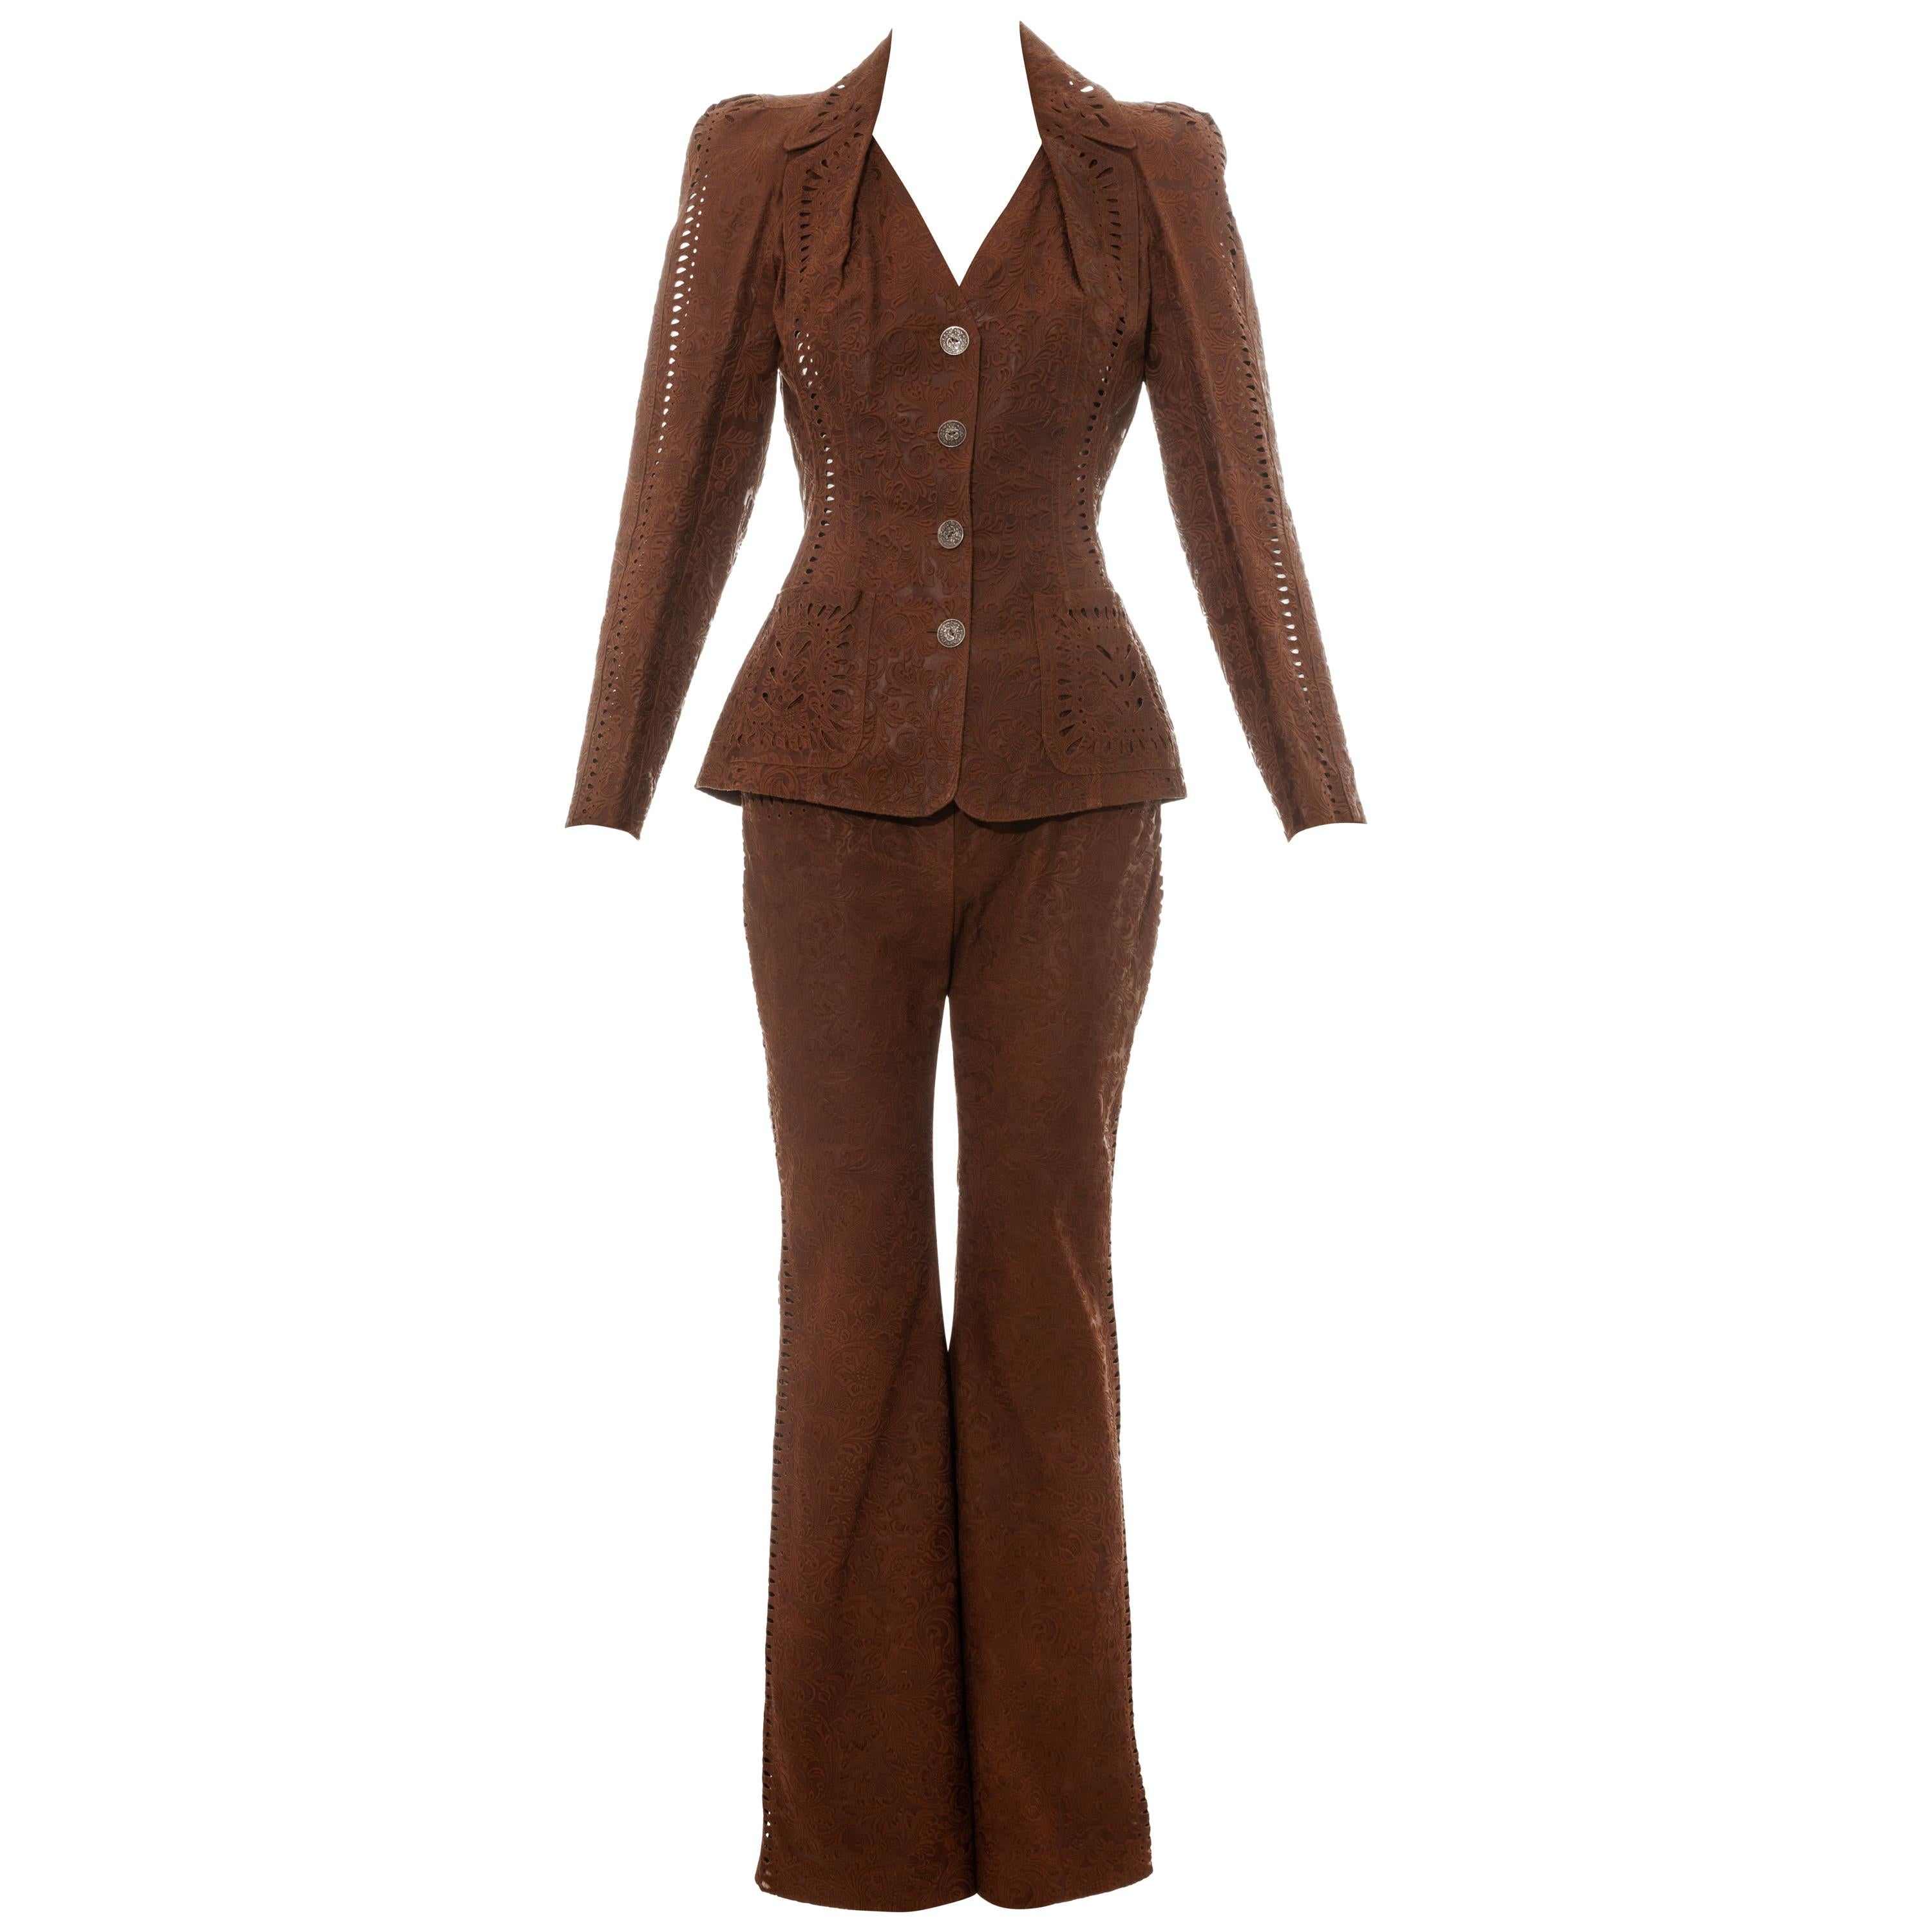 Costume pantalon en cuir marron travaillé Christian Dior par John Galliano, P/E 2006